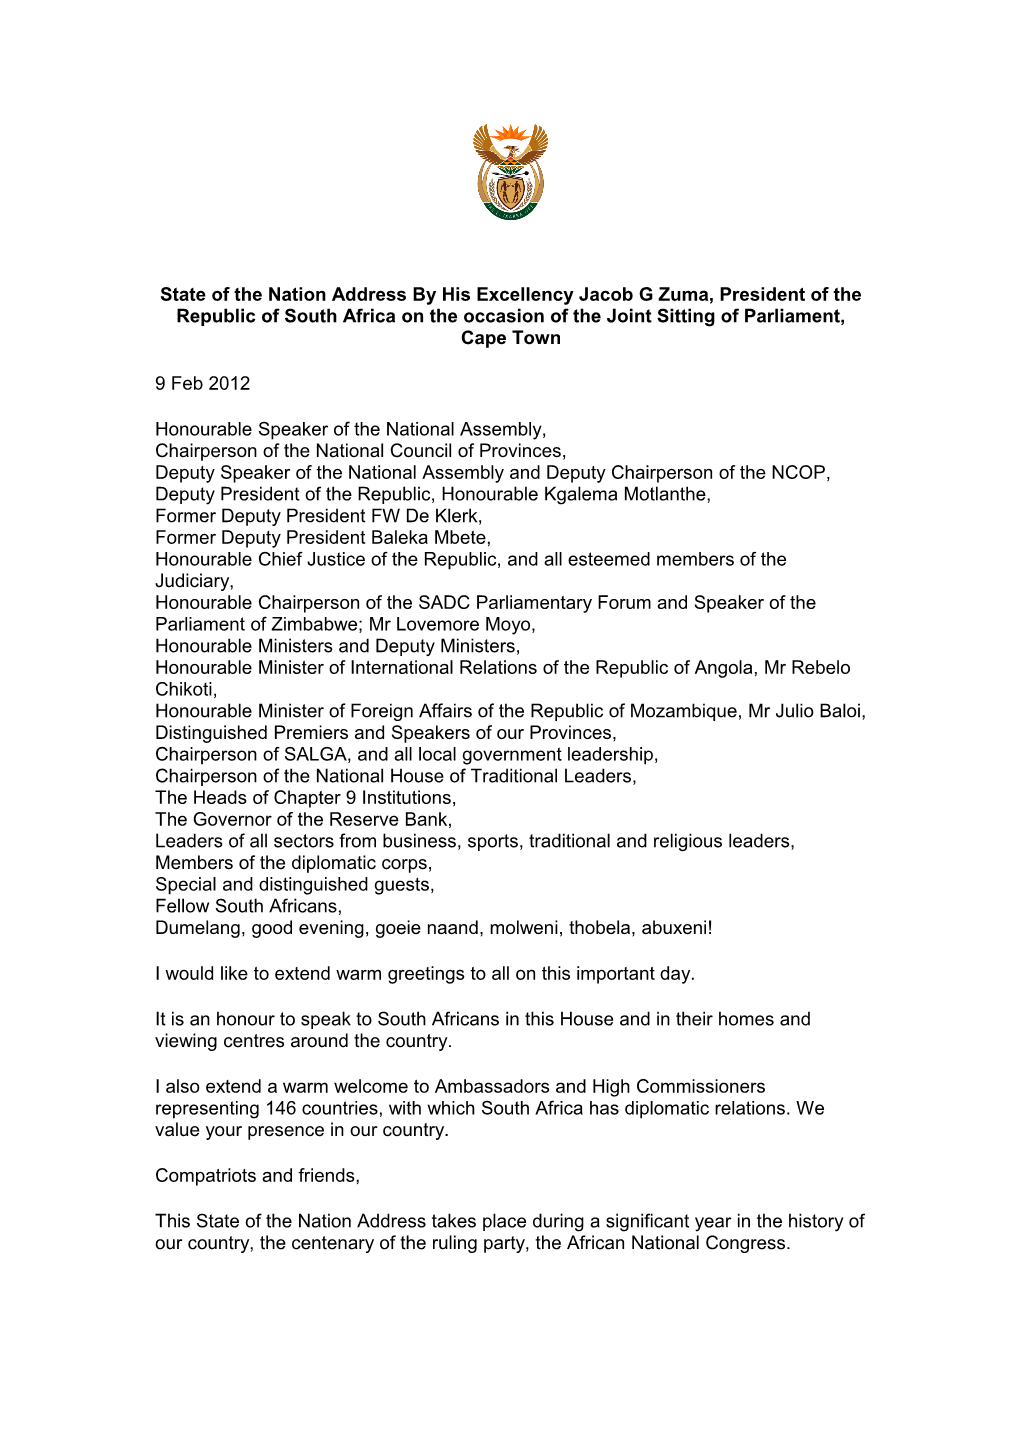 State of the Nation Address 2012 by President Jacob Zuma